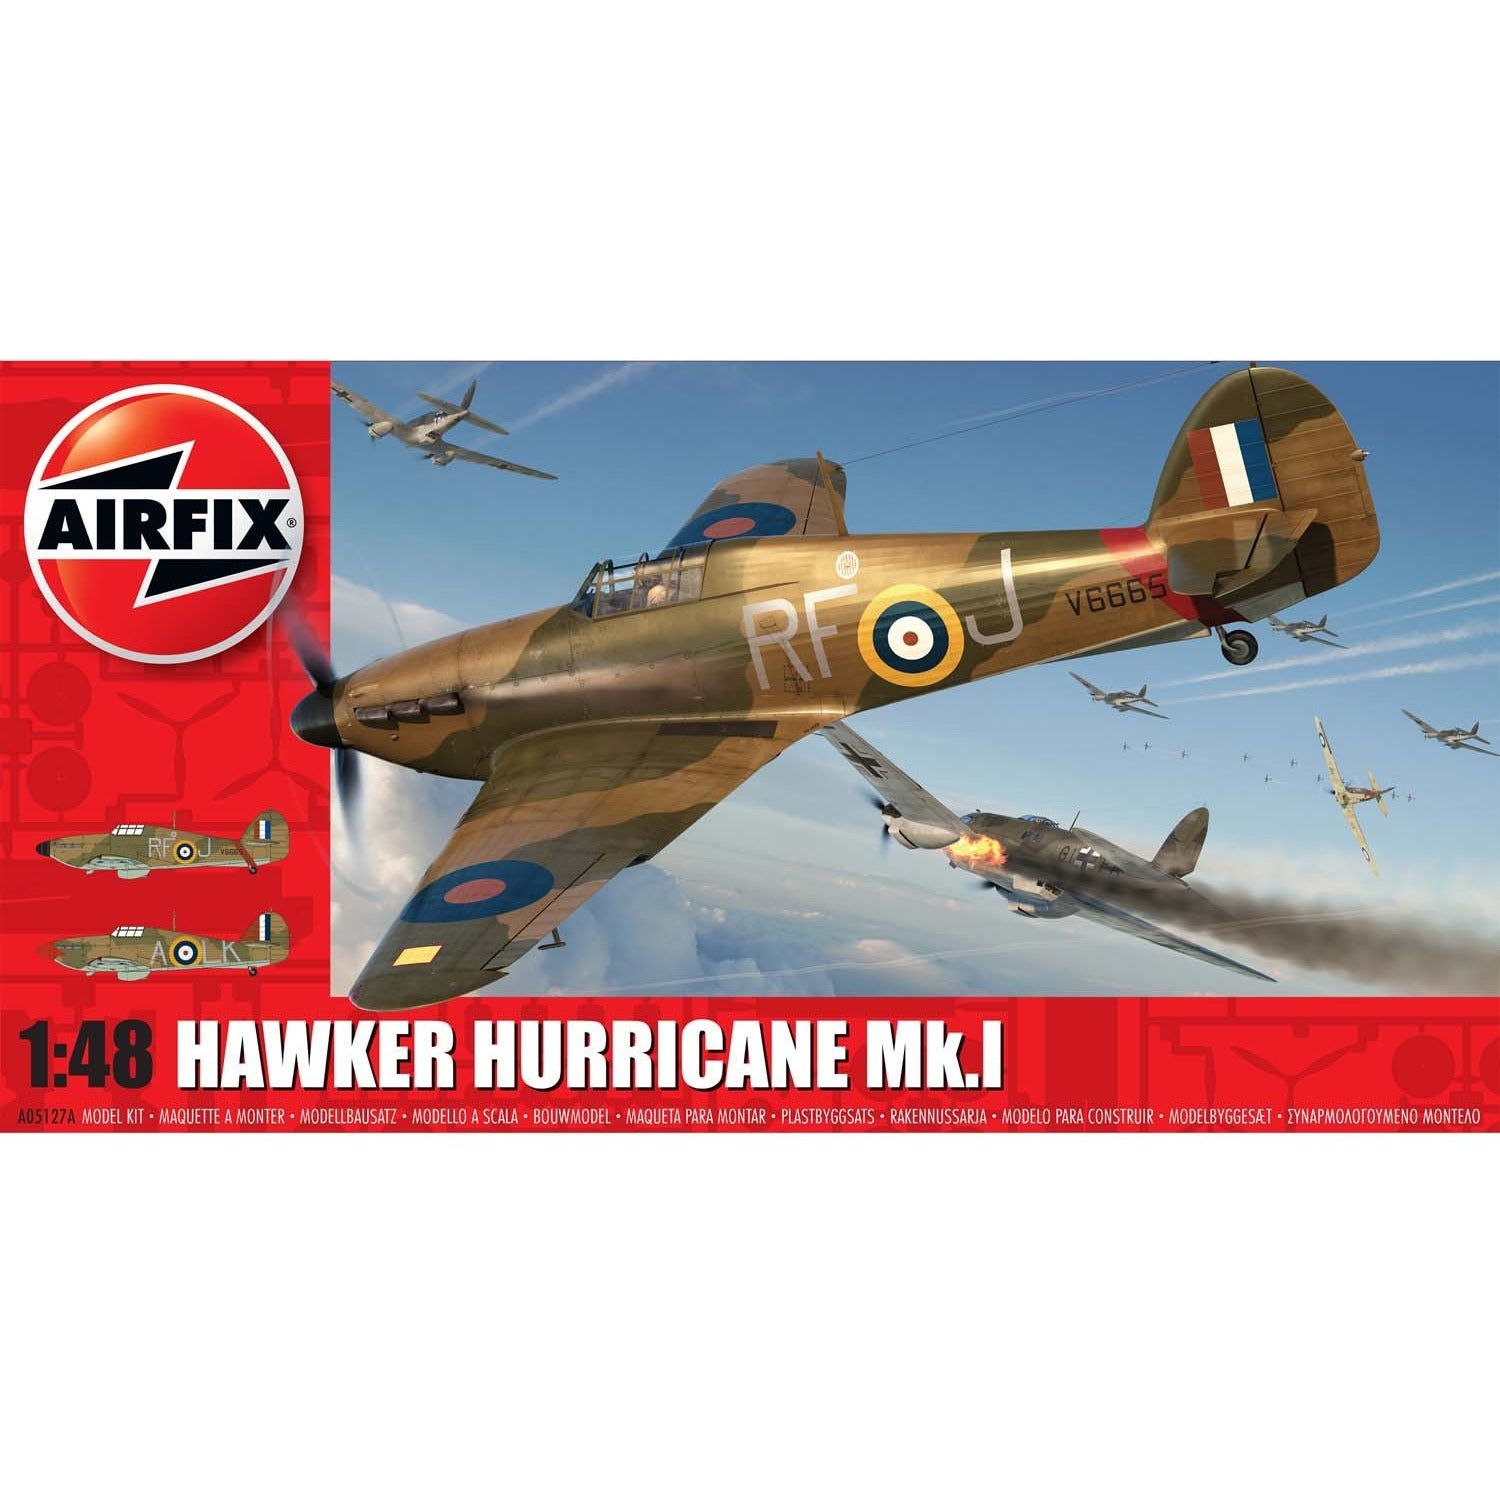 Hawker Hurricane Mk.I 1/48 by Airfix